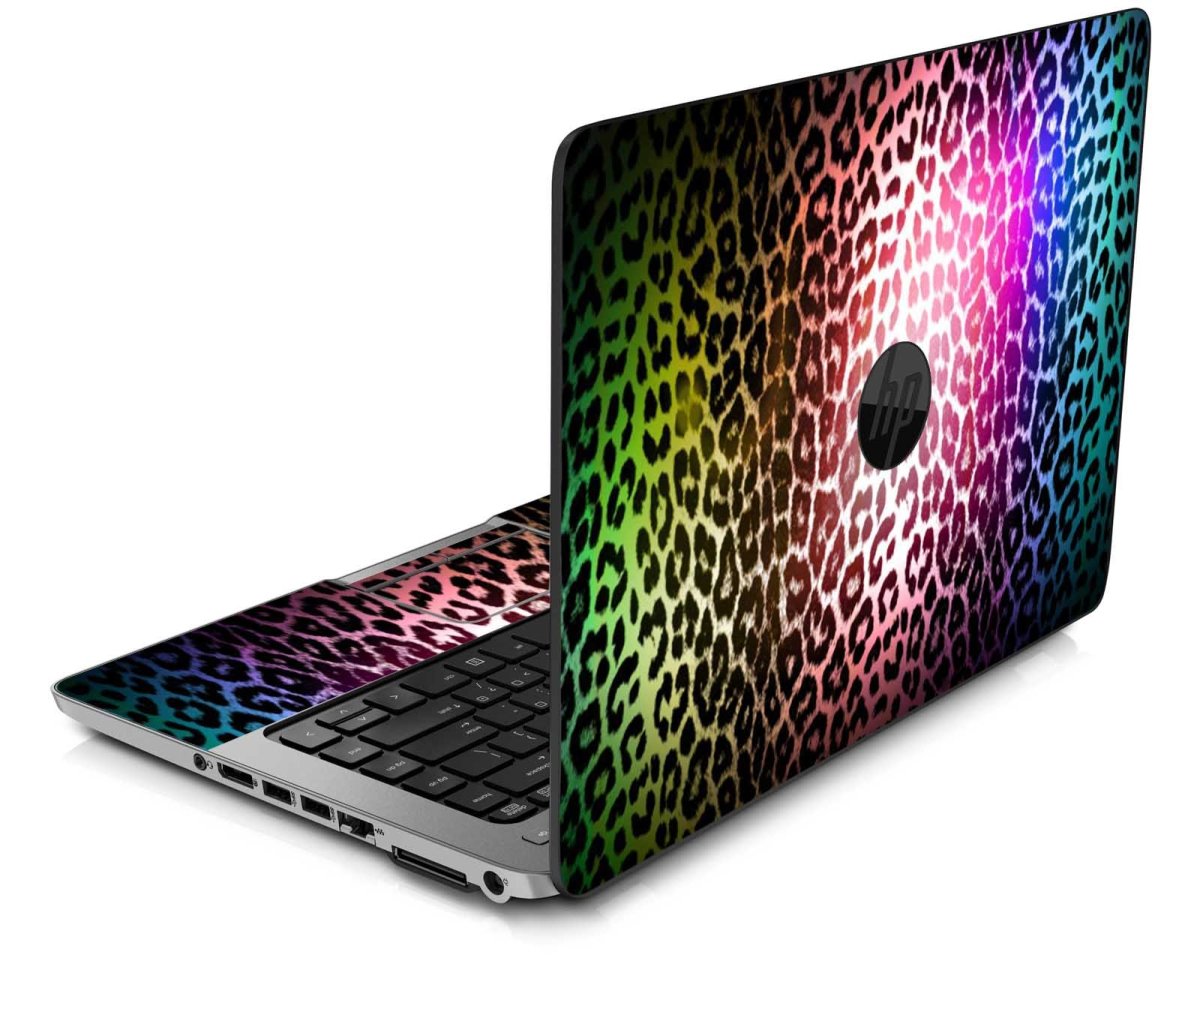 HP EliteBook Folio 1020 G1 RAINBOW LEOPARD Laptop Skin